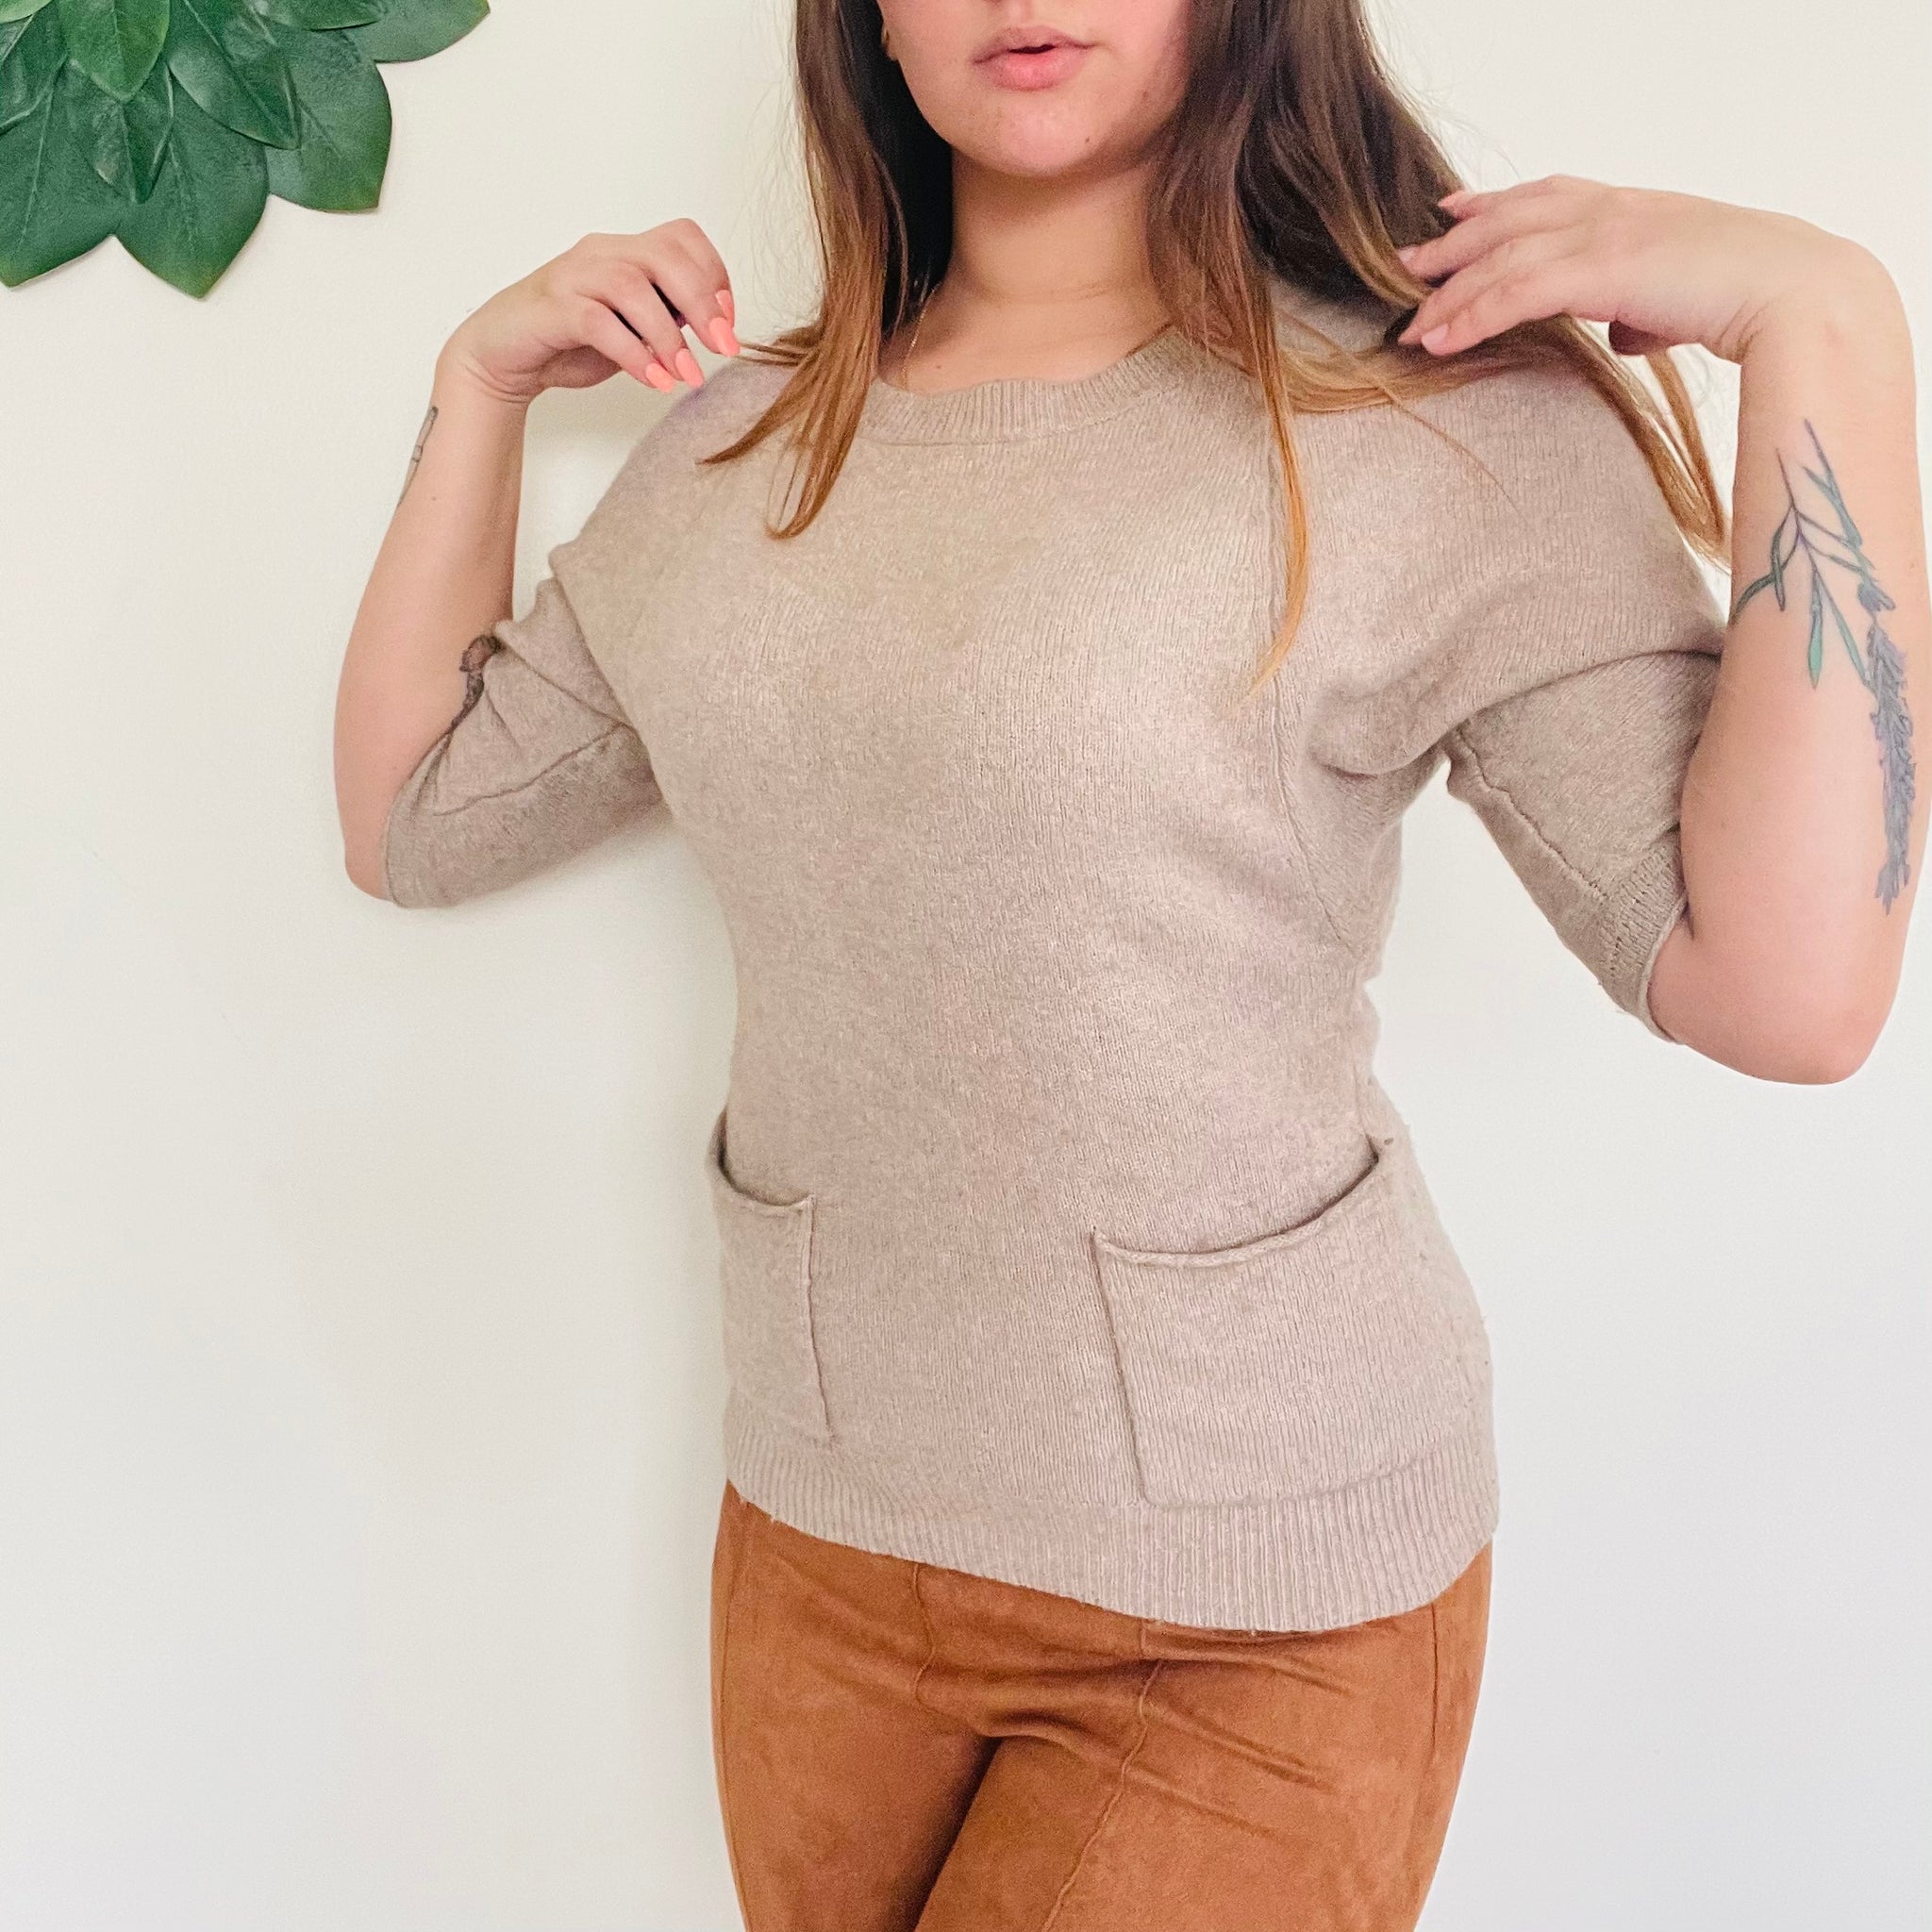 Cashmere blend Nevena sweater, Size XS